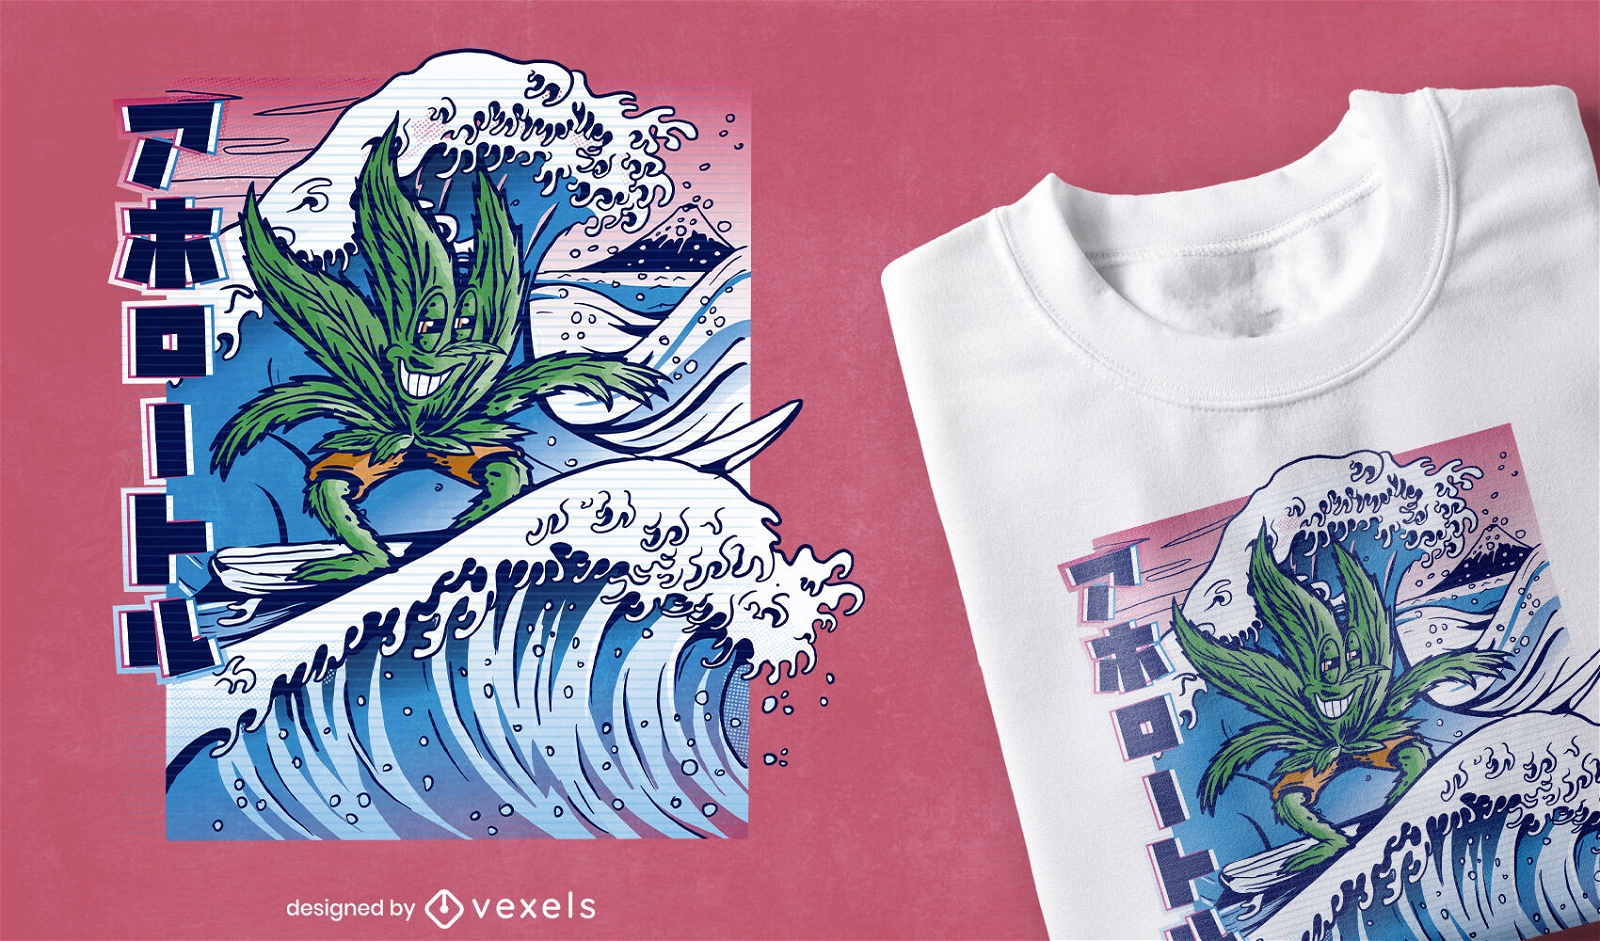 Weed leaf surfing t-shirt design